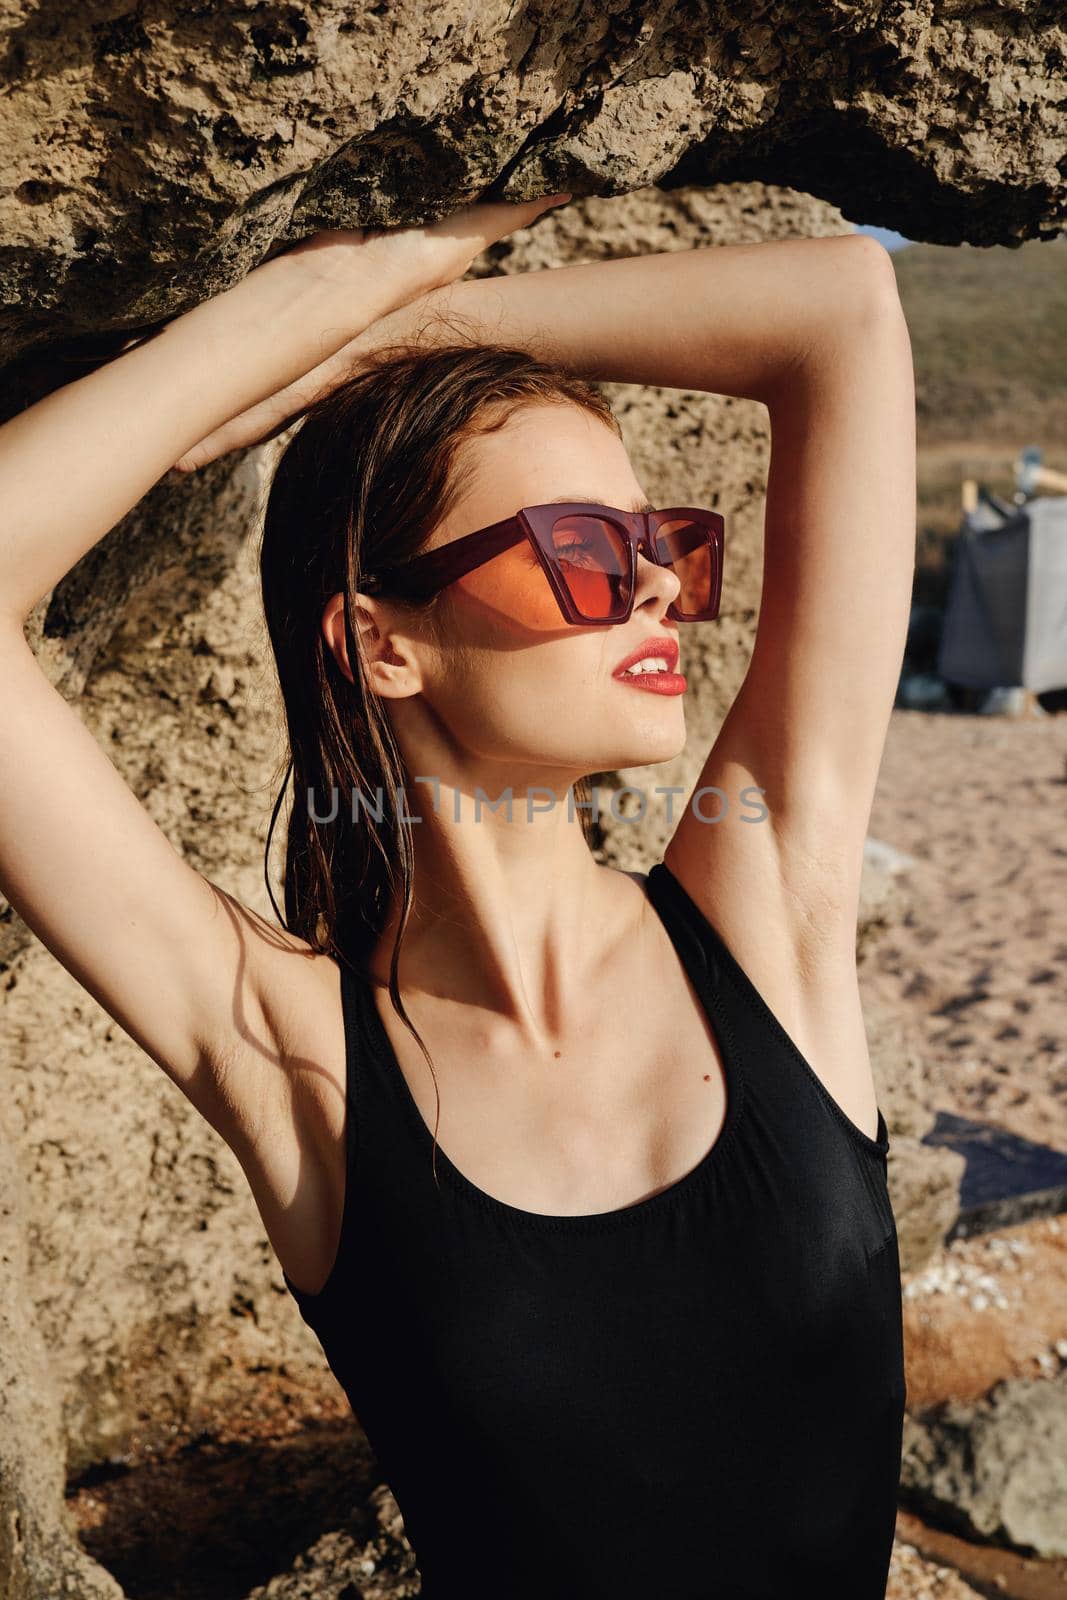 pretty woman in black swimsuit sunglasses posing sun by Vichizh